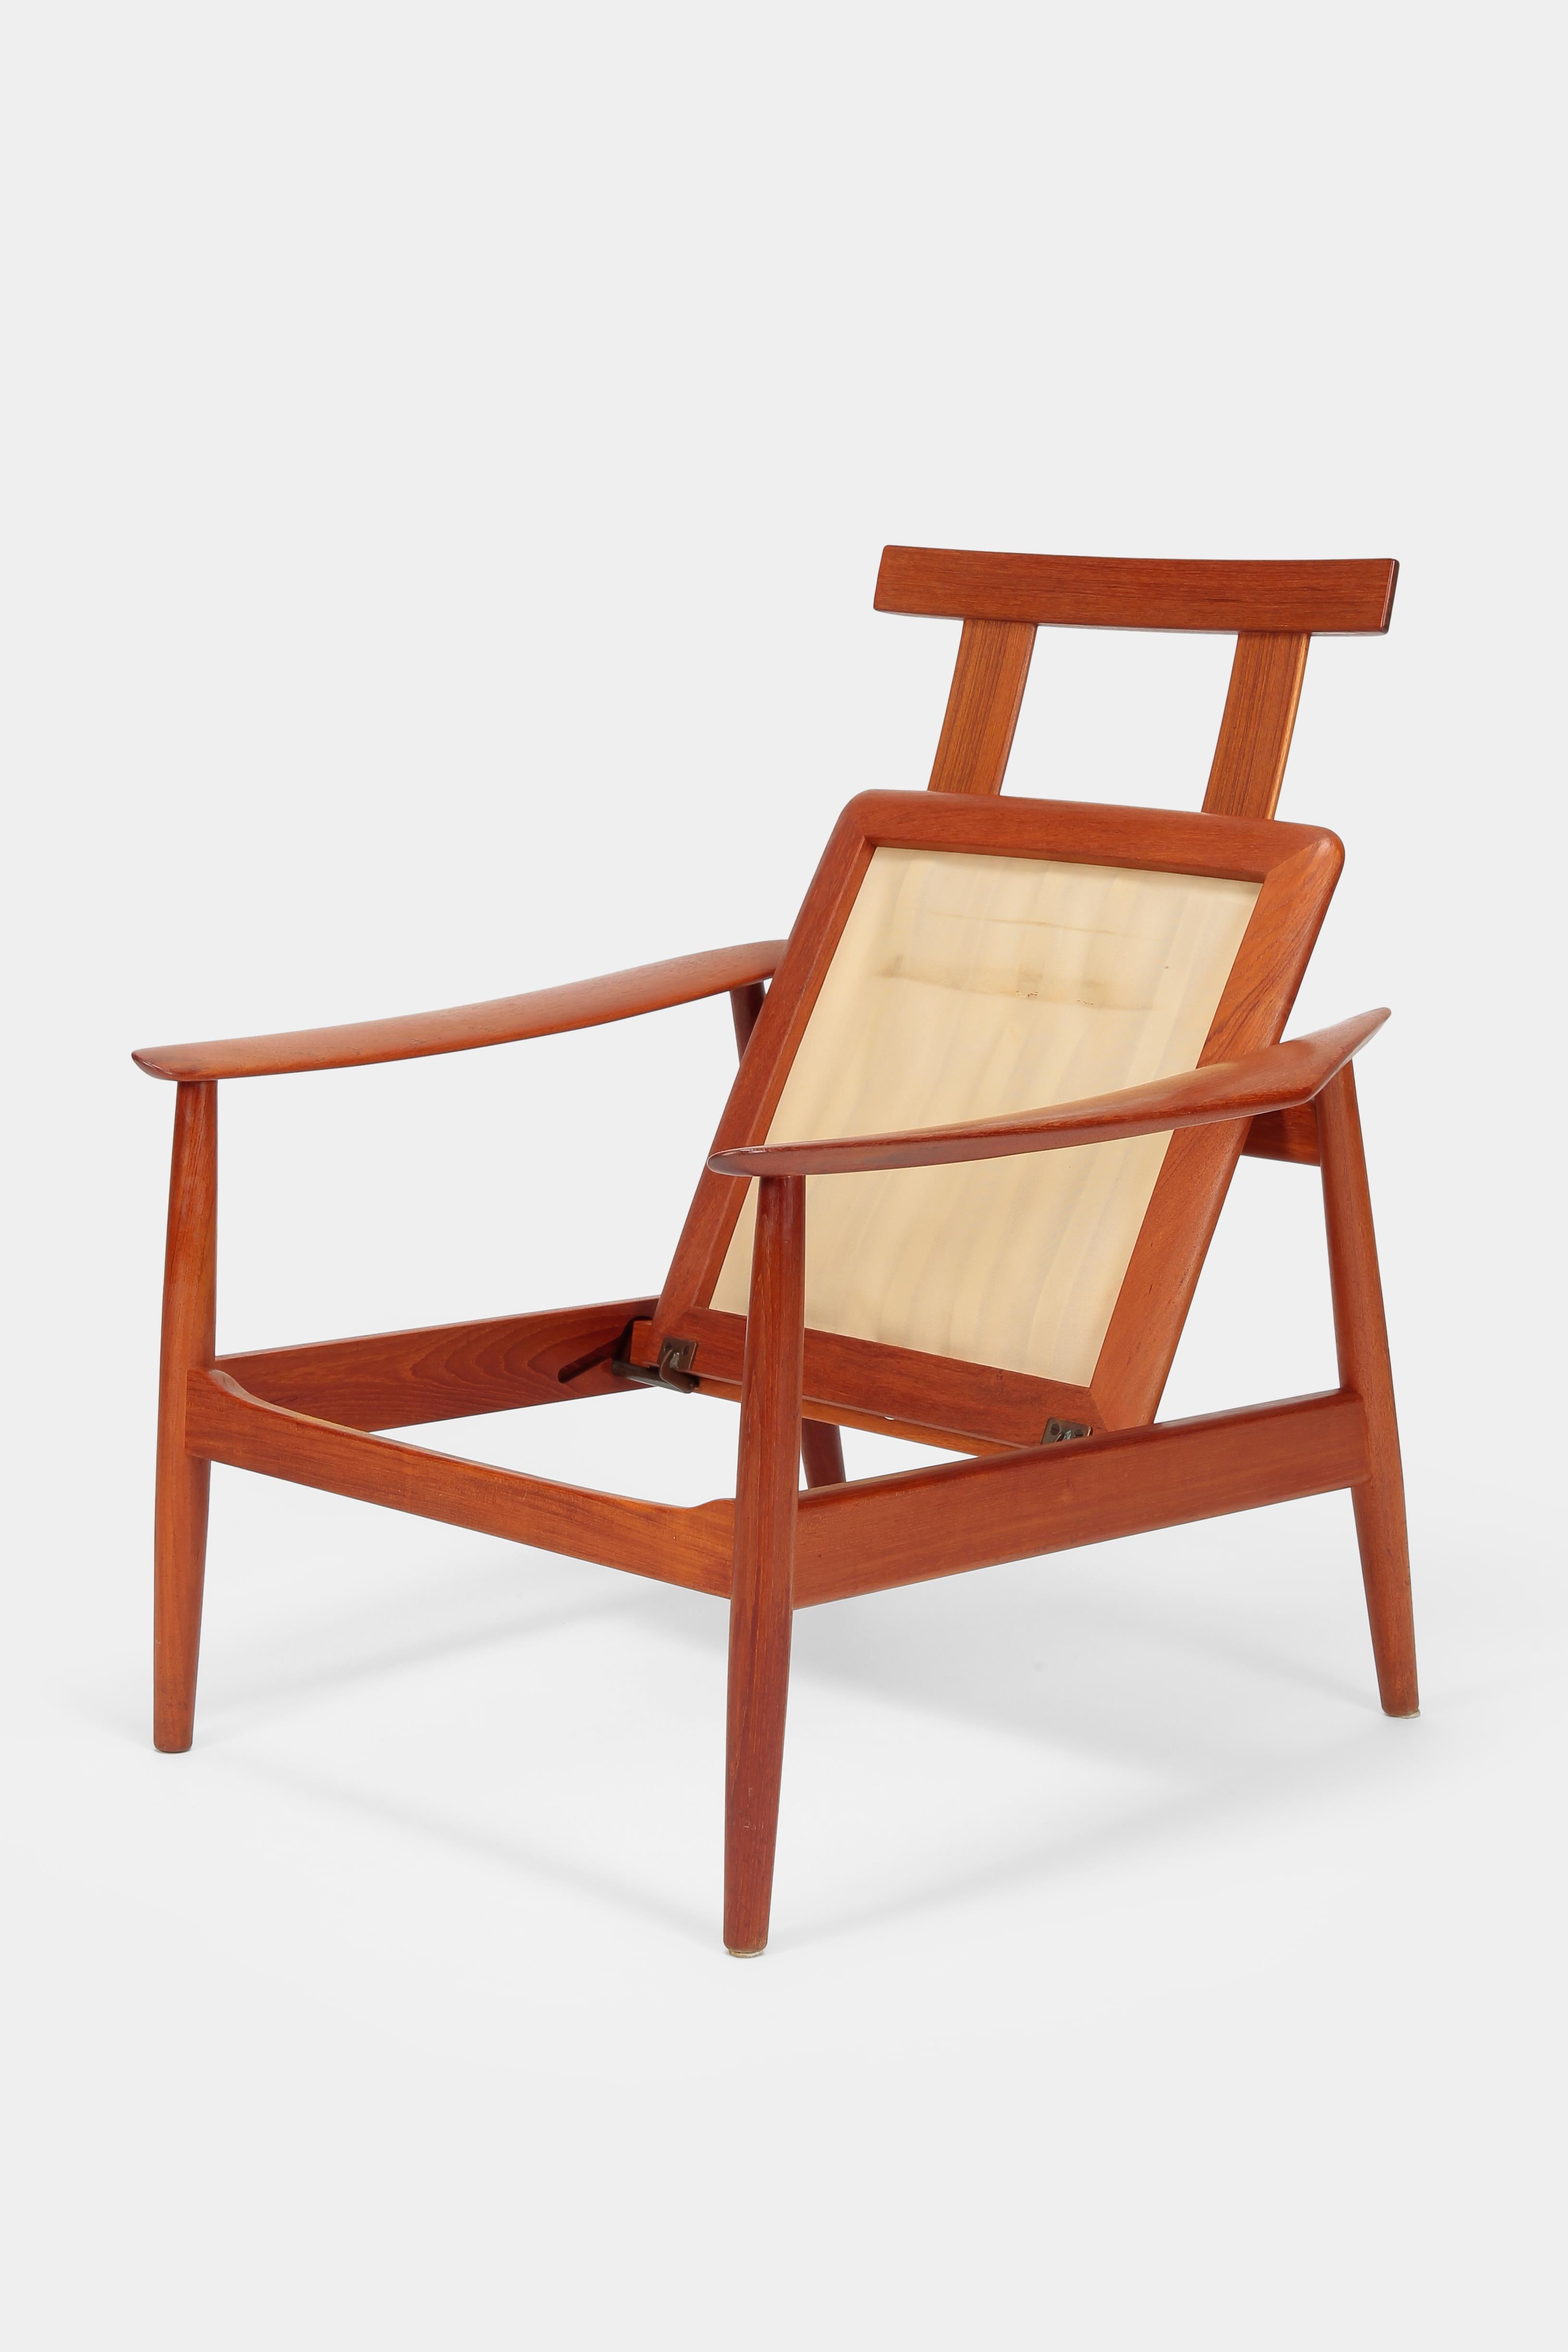 2 Arne Vodder High Back Chairs France & Son Teak, 1960s For Sale 6